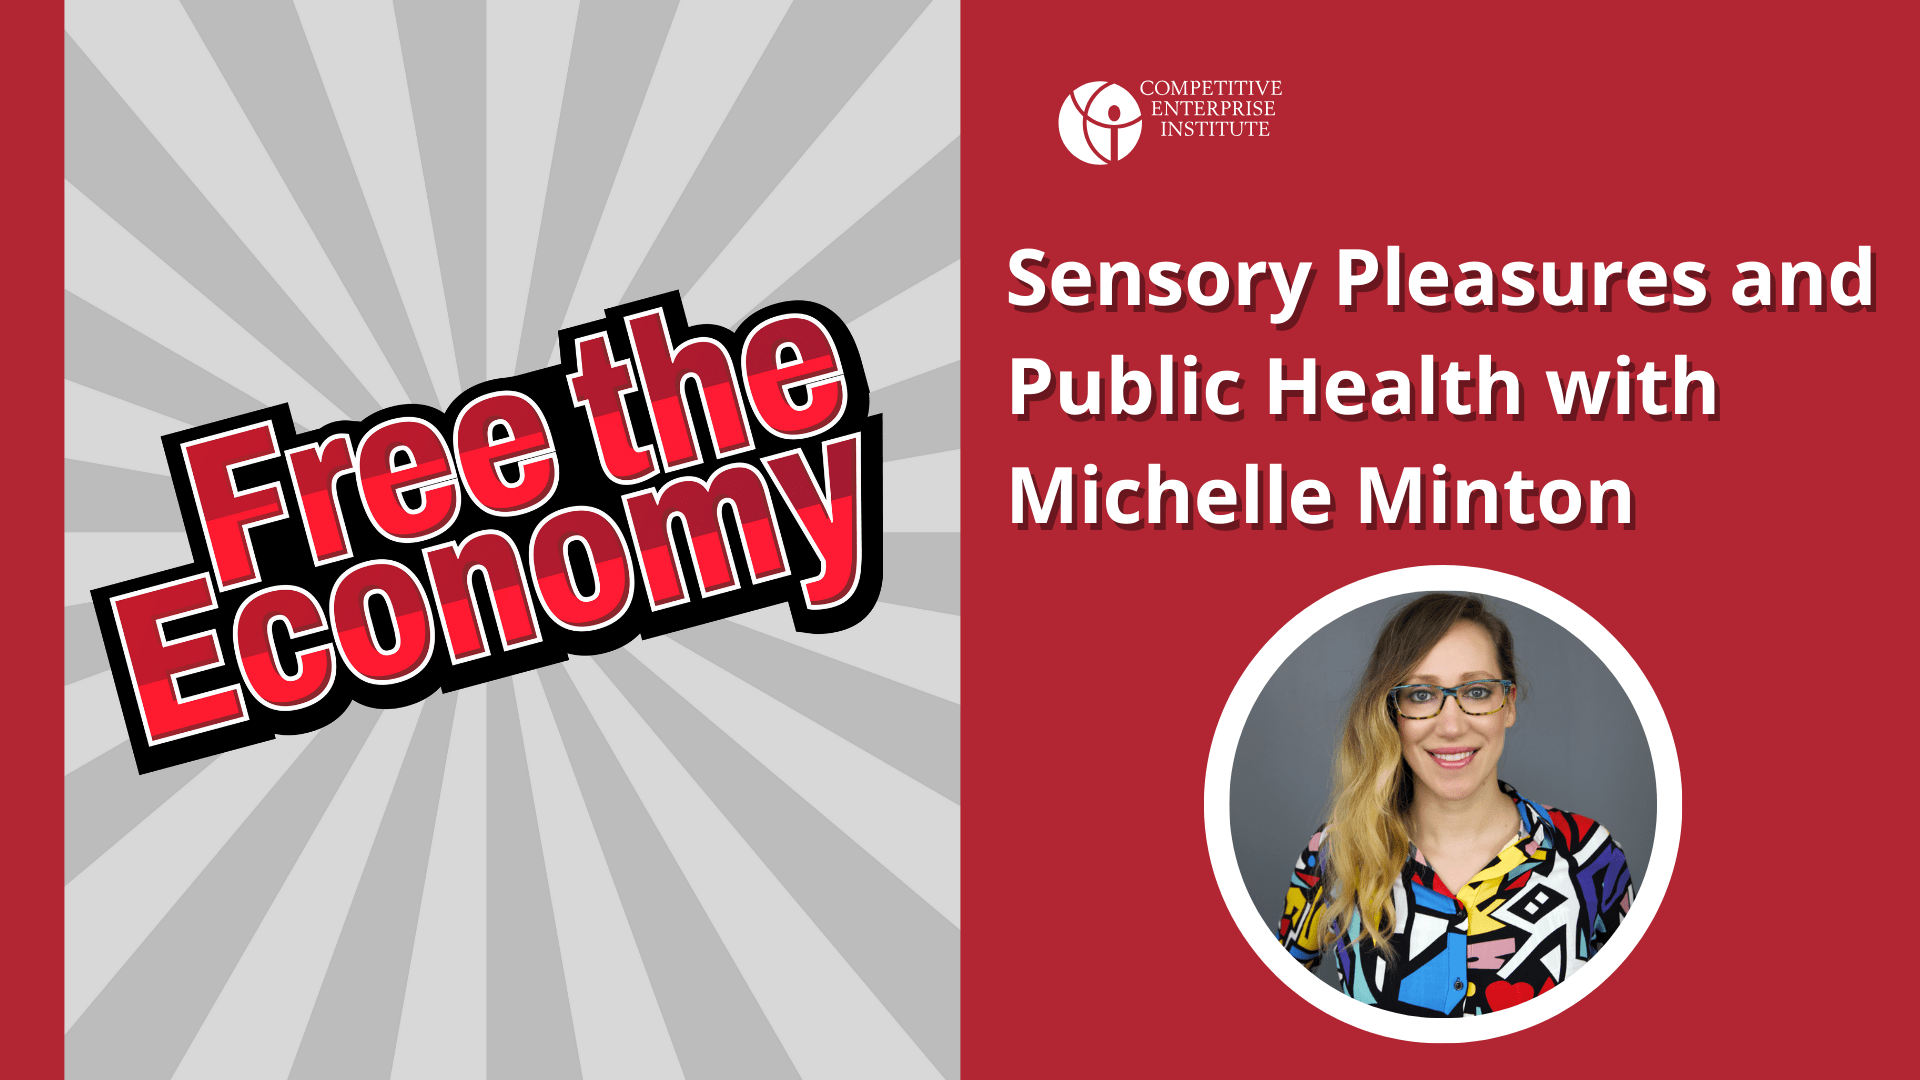 Sensory Pleasures and Public Health with Michelle Minton